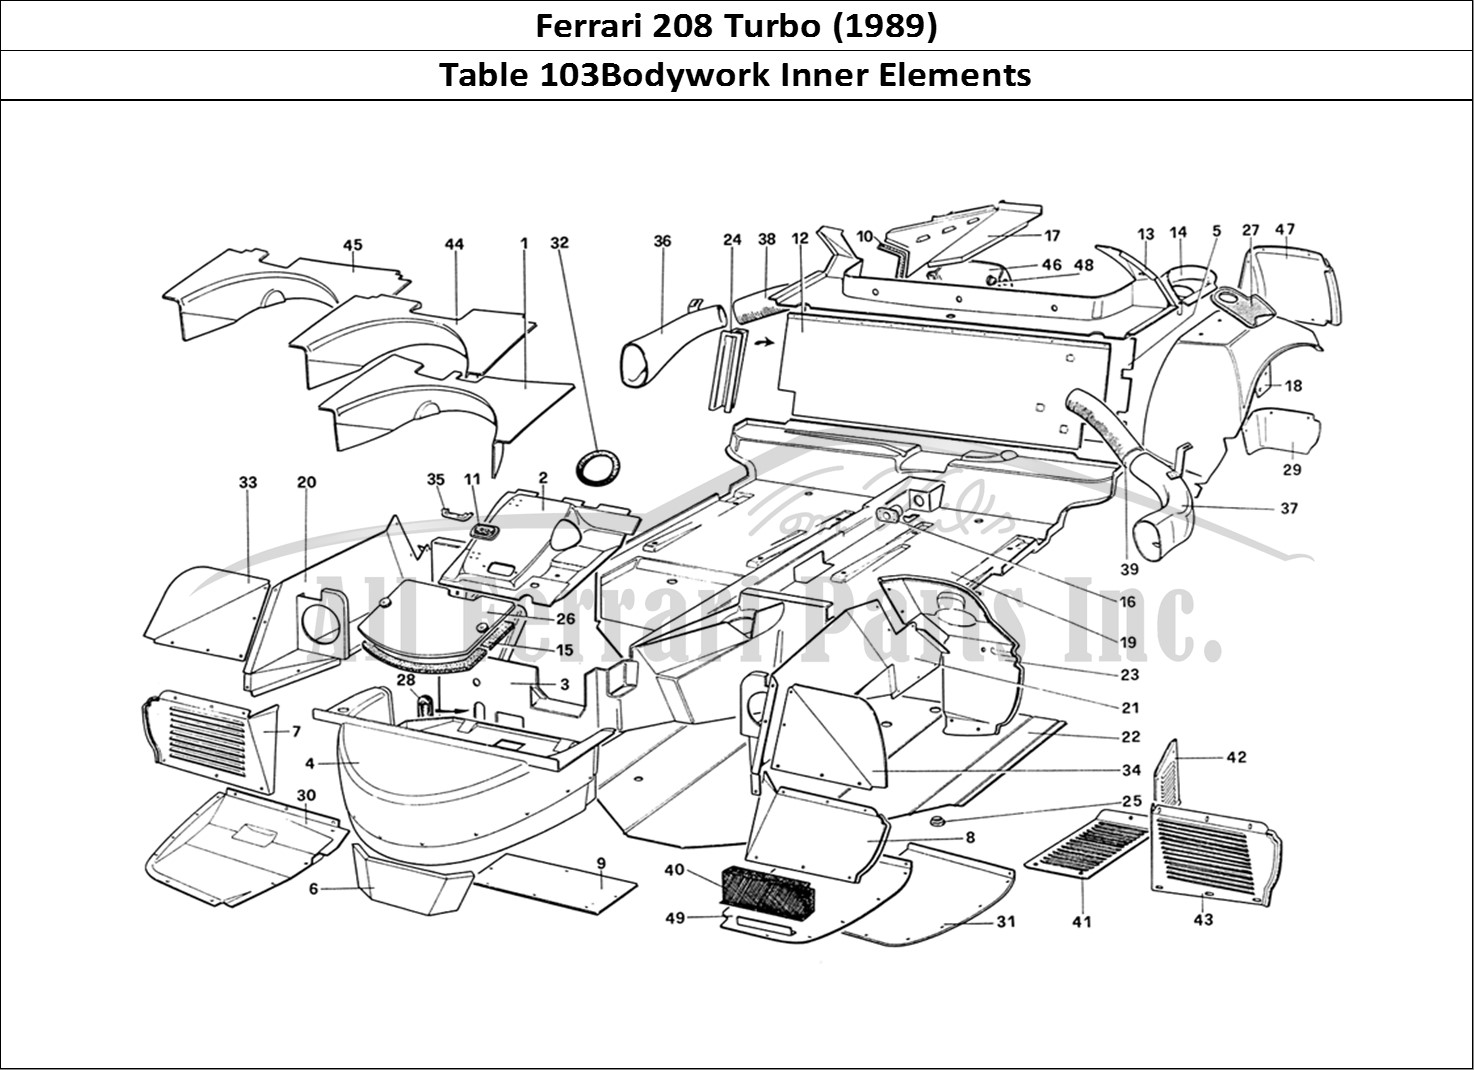 Ferrari Parts Ferrari 208 Turbo (1989) Page 103 Body Shell - Inner Elemen